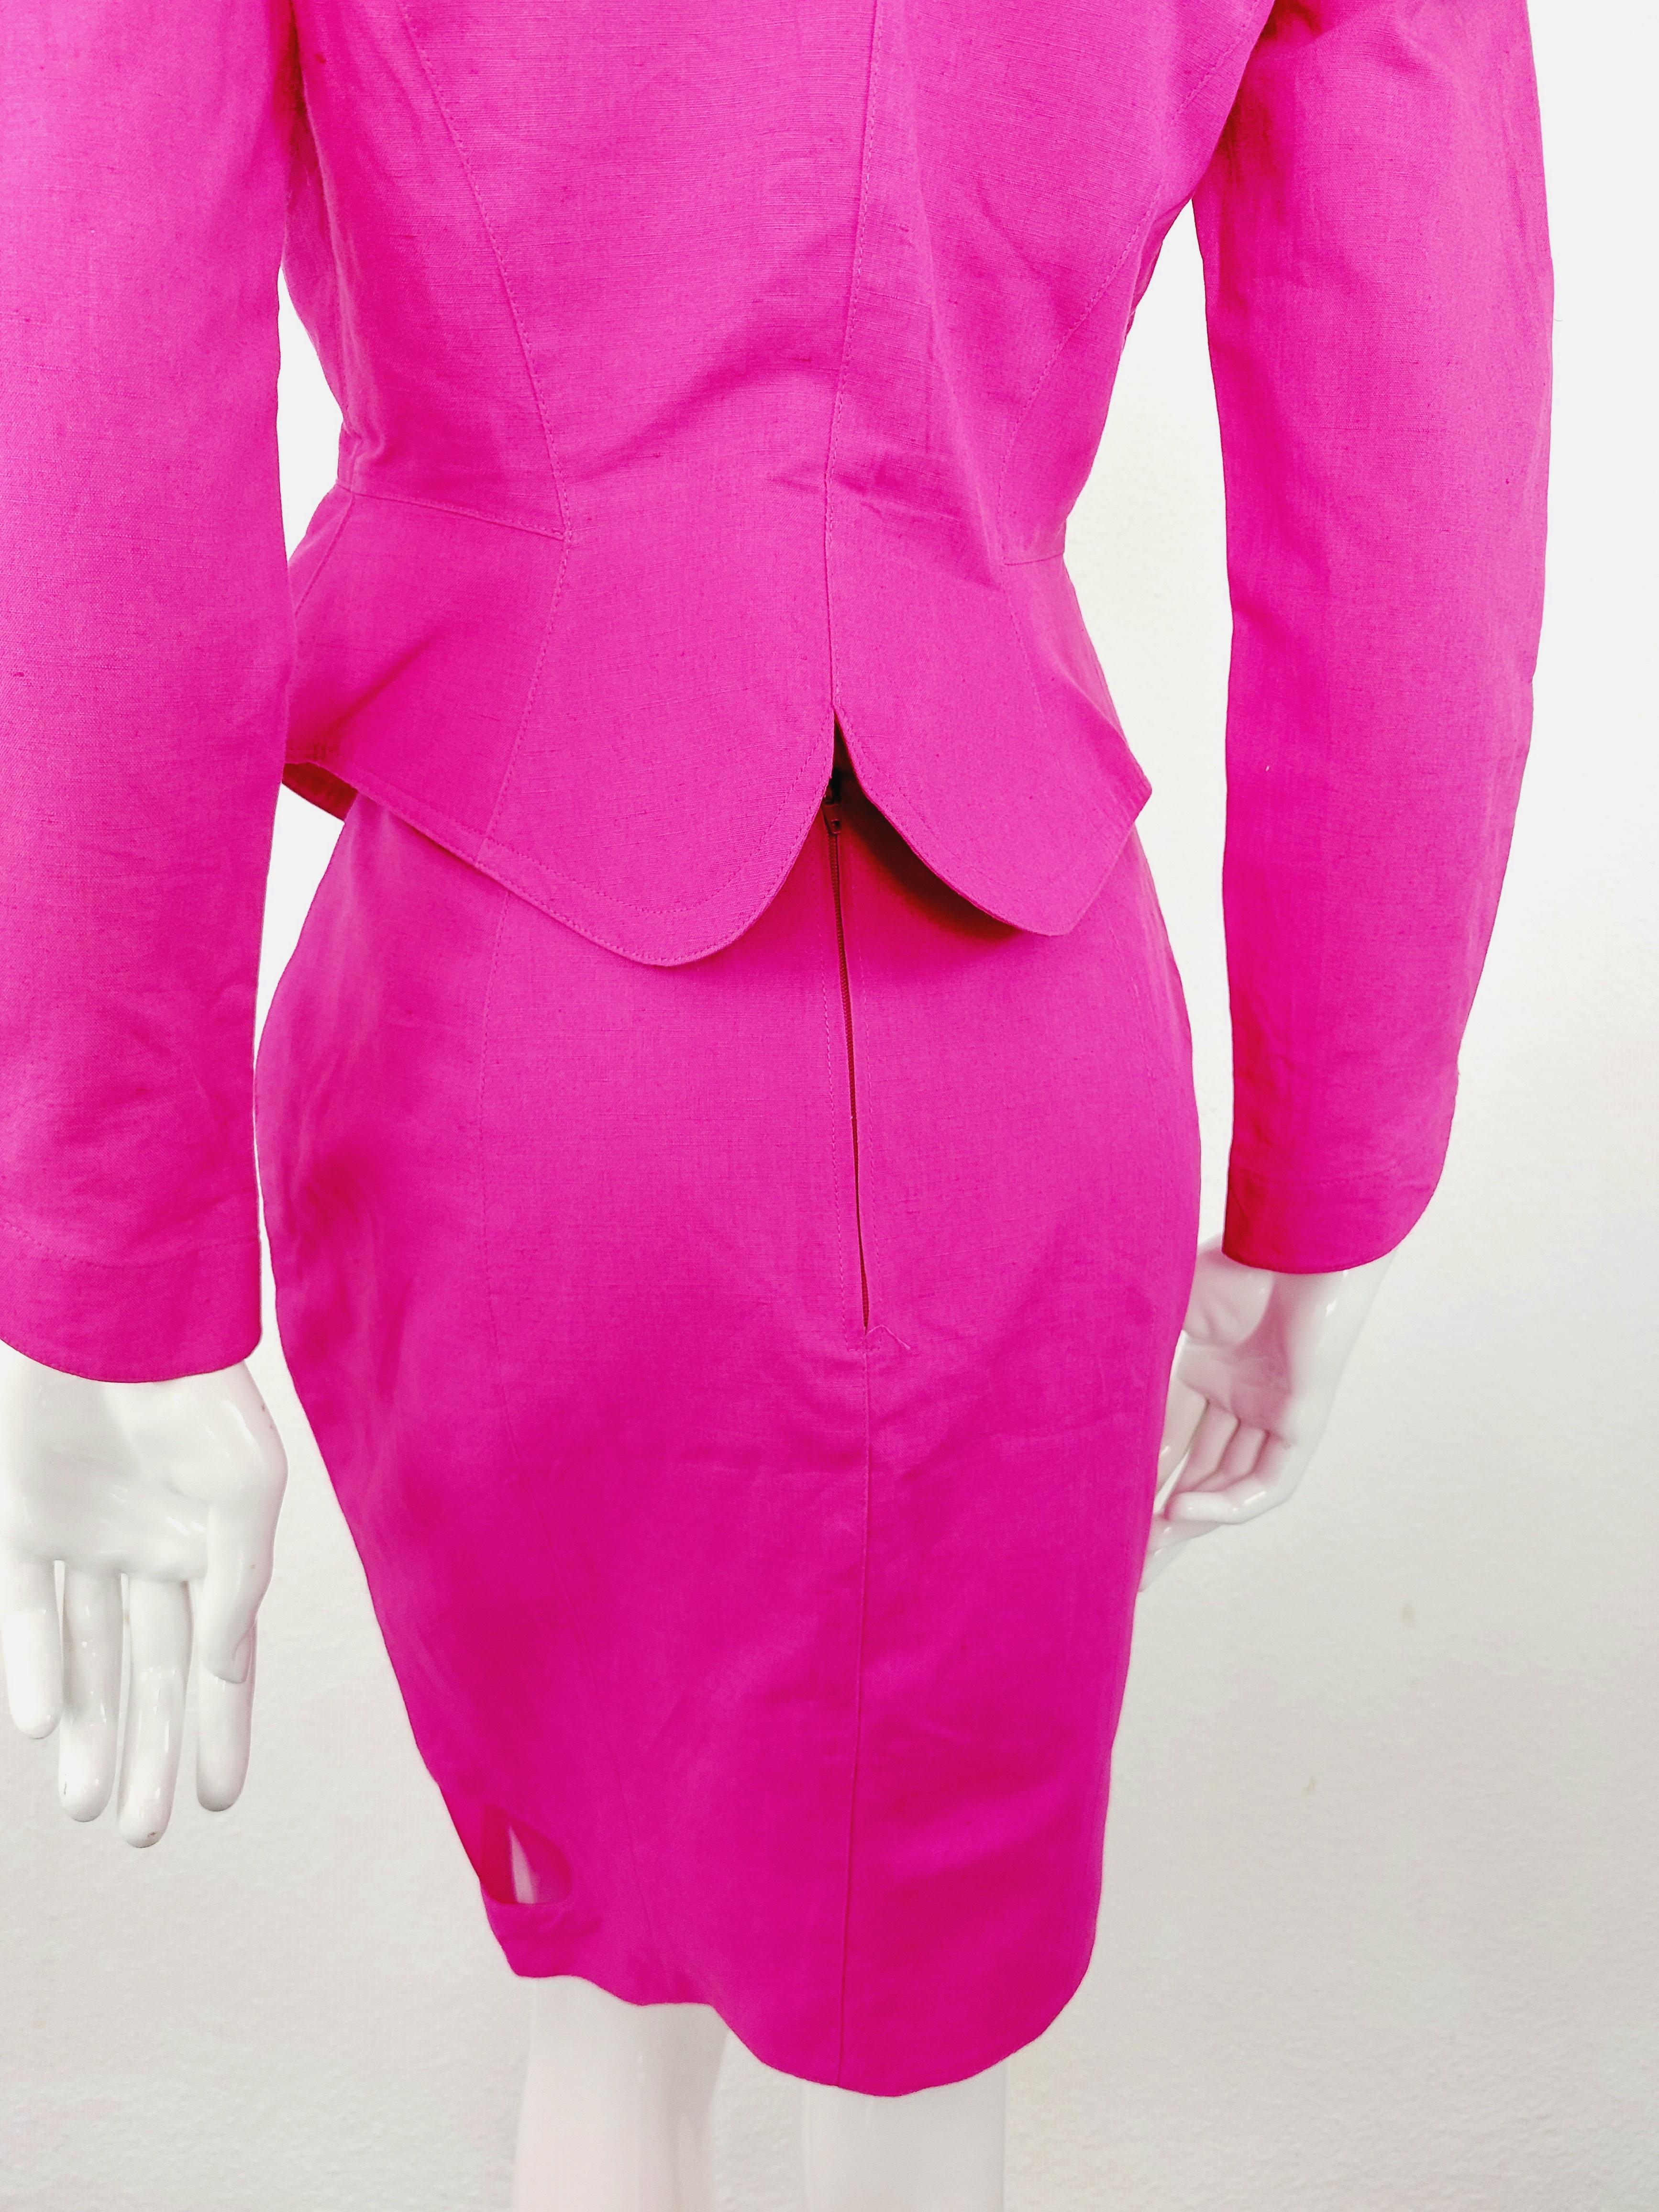 Thierry Mugler 1980s Pink Sculptural Hourglass Cutout Transparent Skirt Suit Set 8